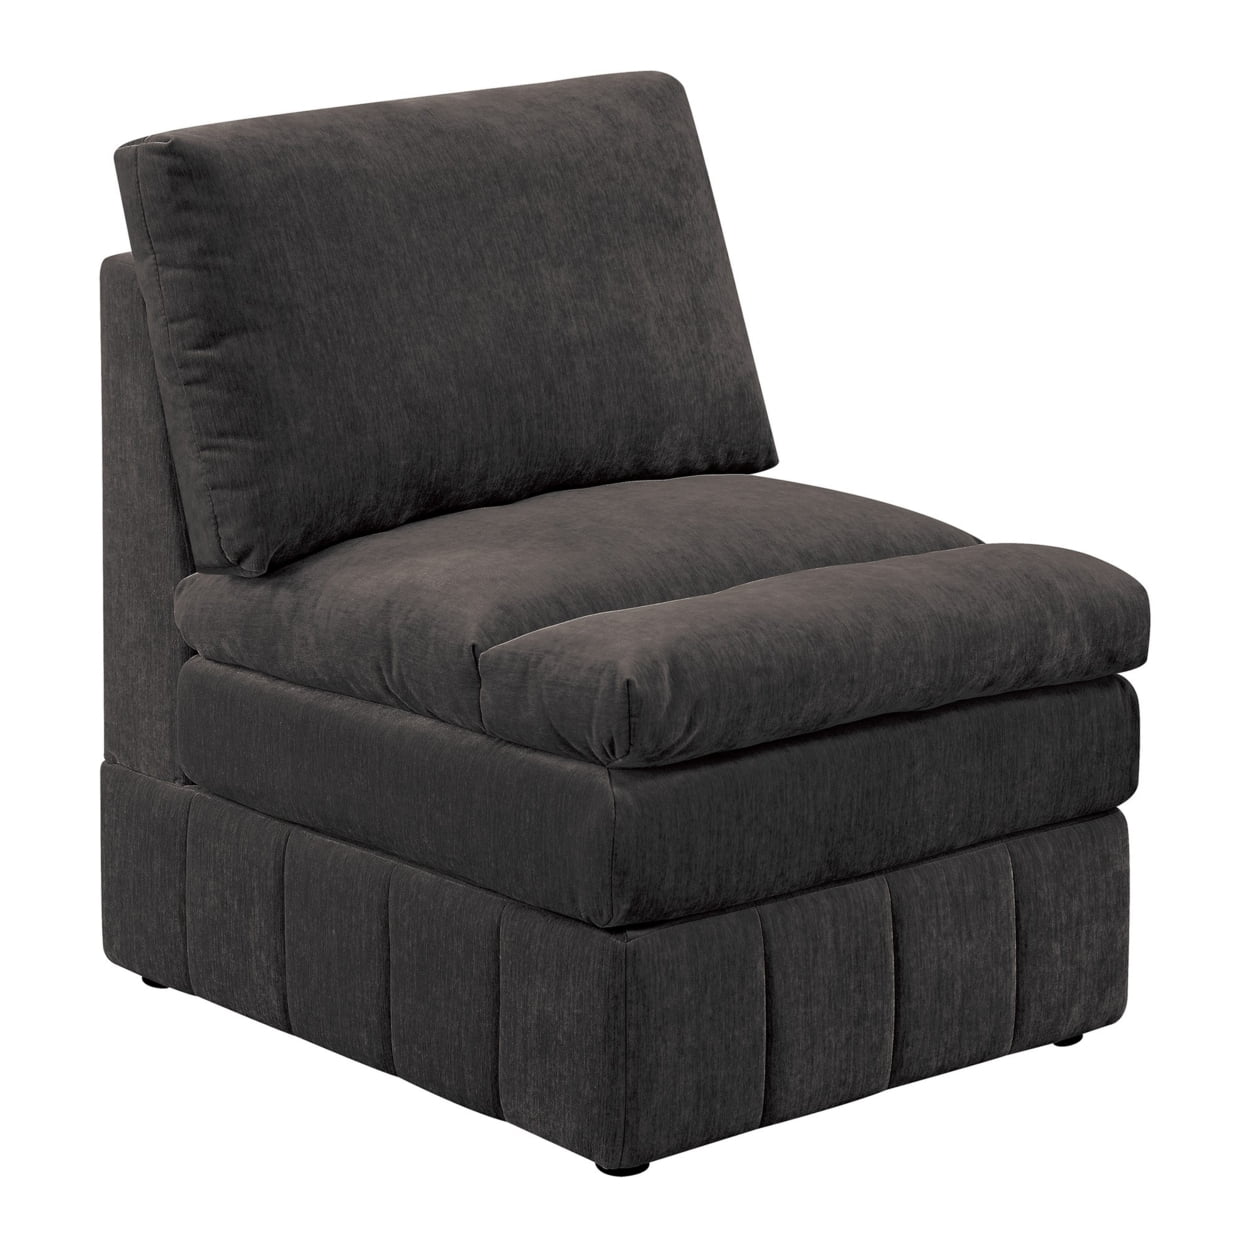 Picture of BenJara BM284332 35 in. Luna 3 Layer Plush Cushion Seat Modular Armless Chair, Dark Gray